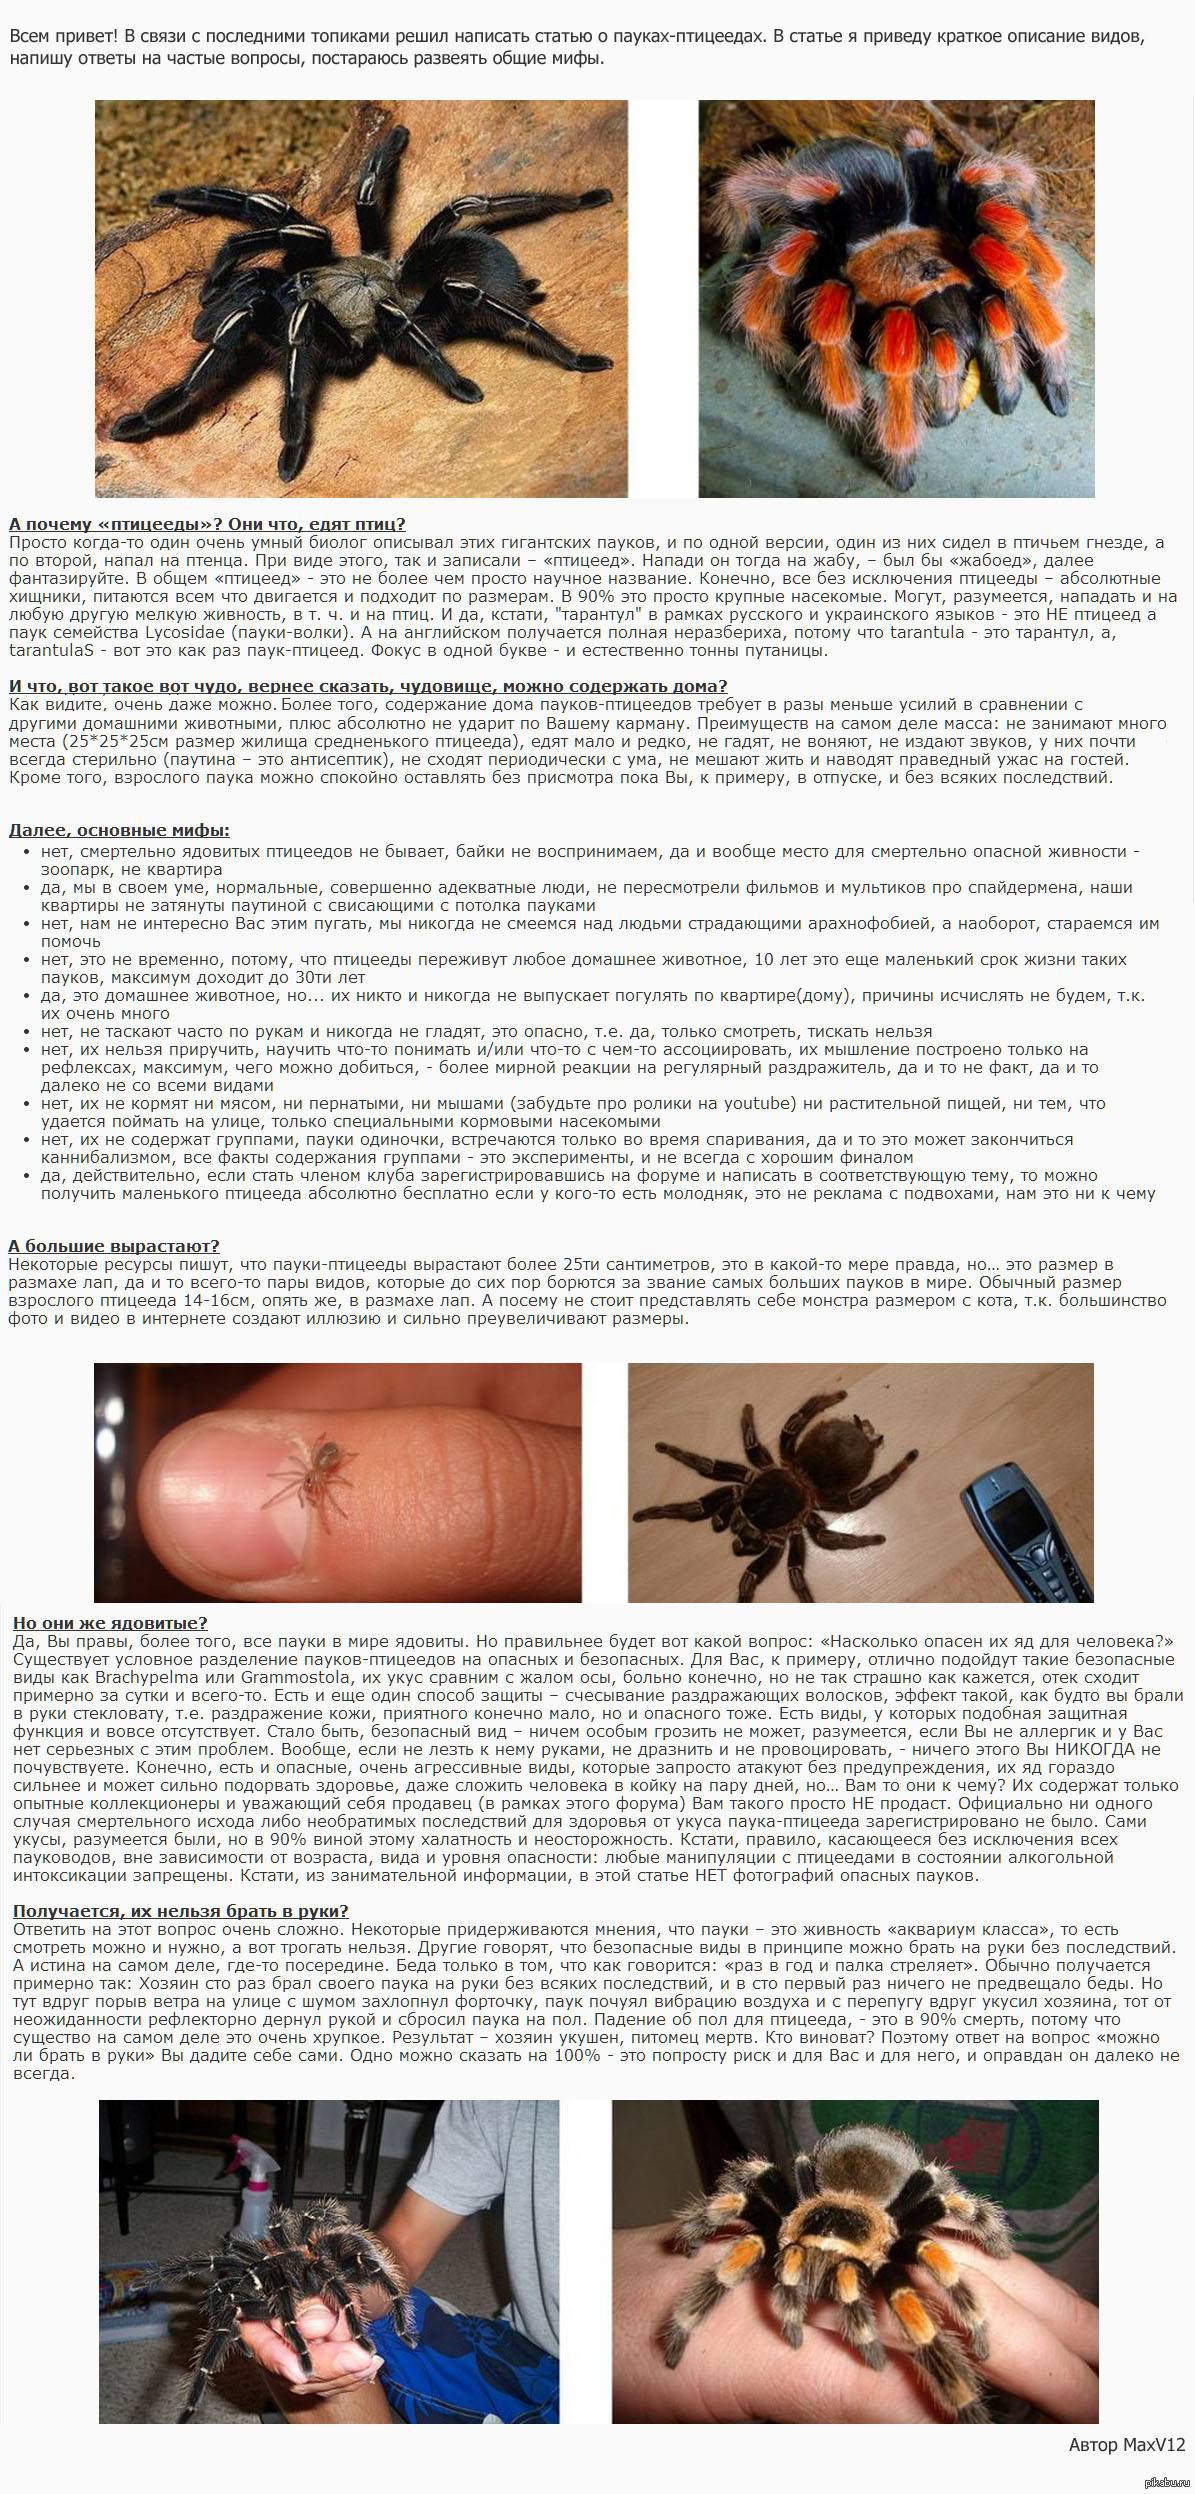 Содержание тарантулов в домашних условиях